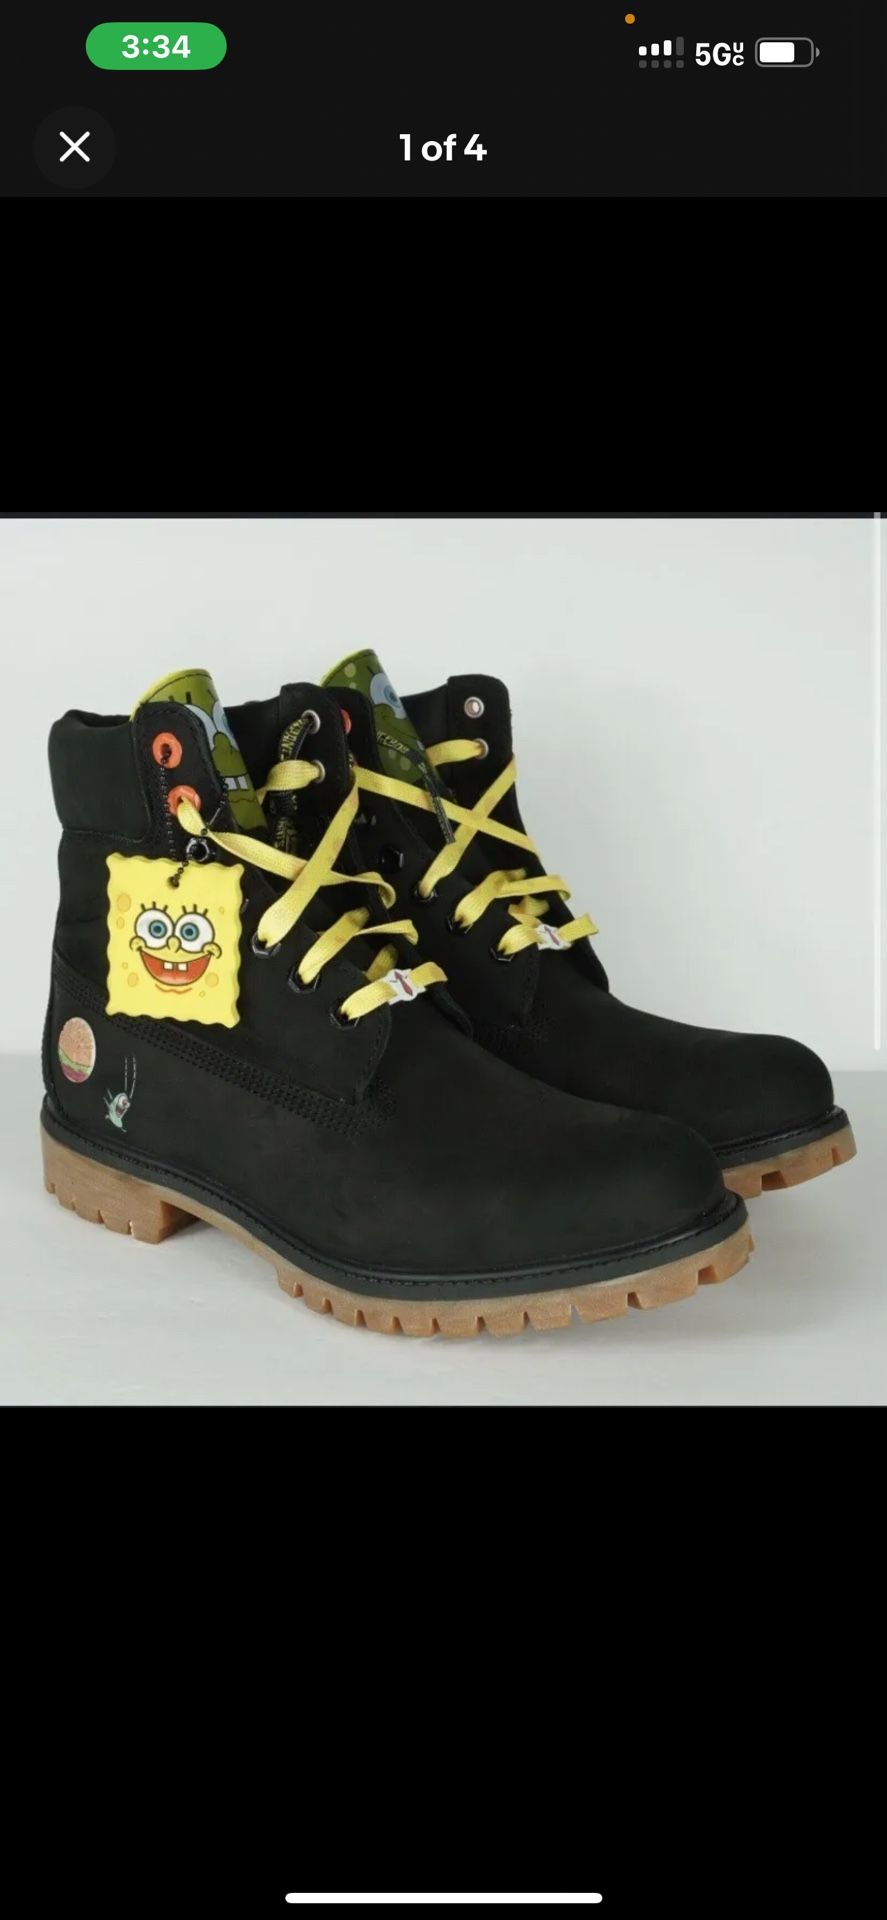 Limited Edition Spongebob Timberland 